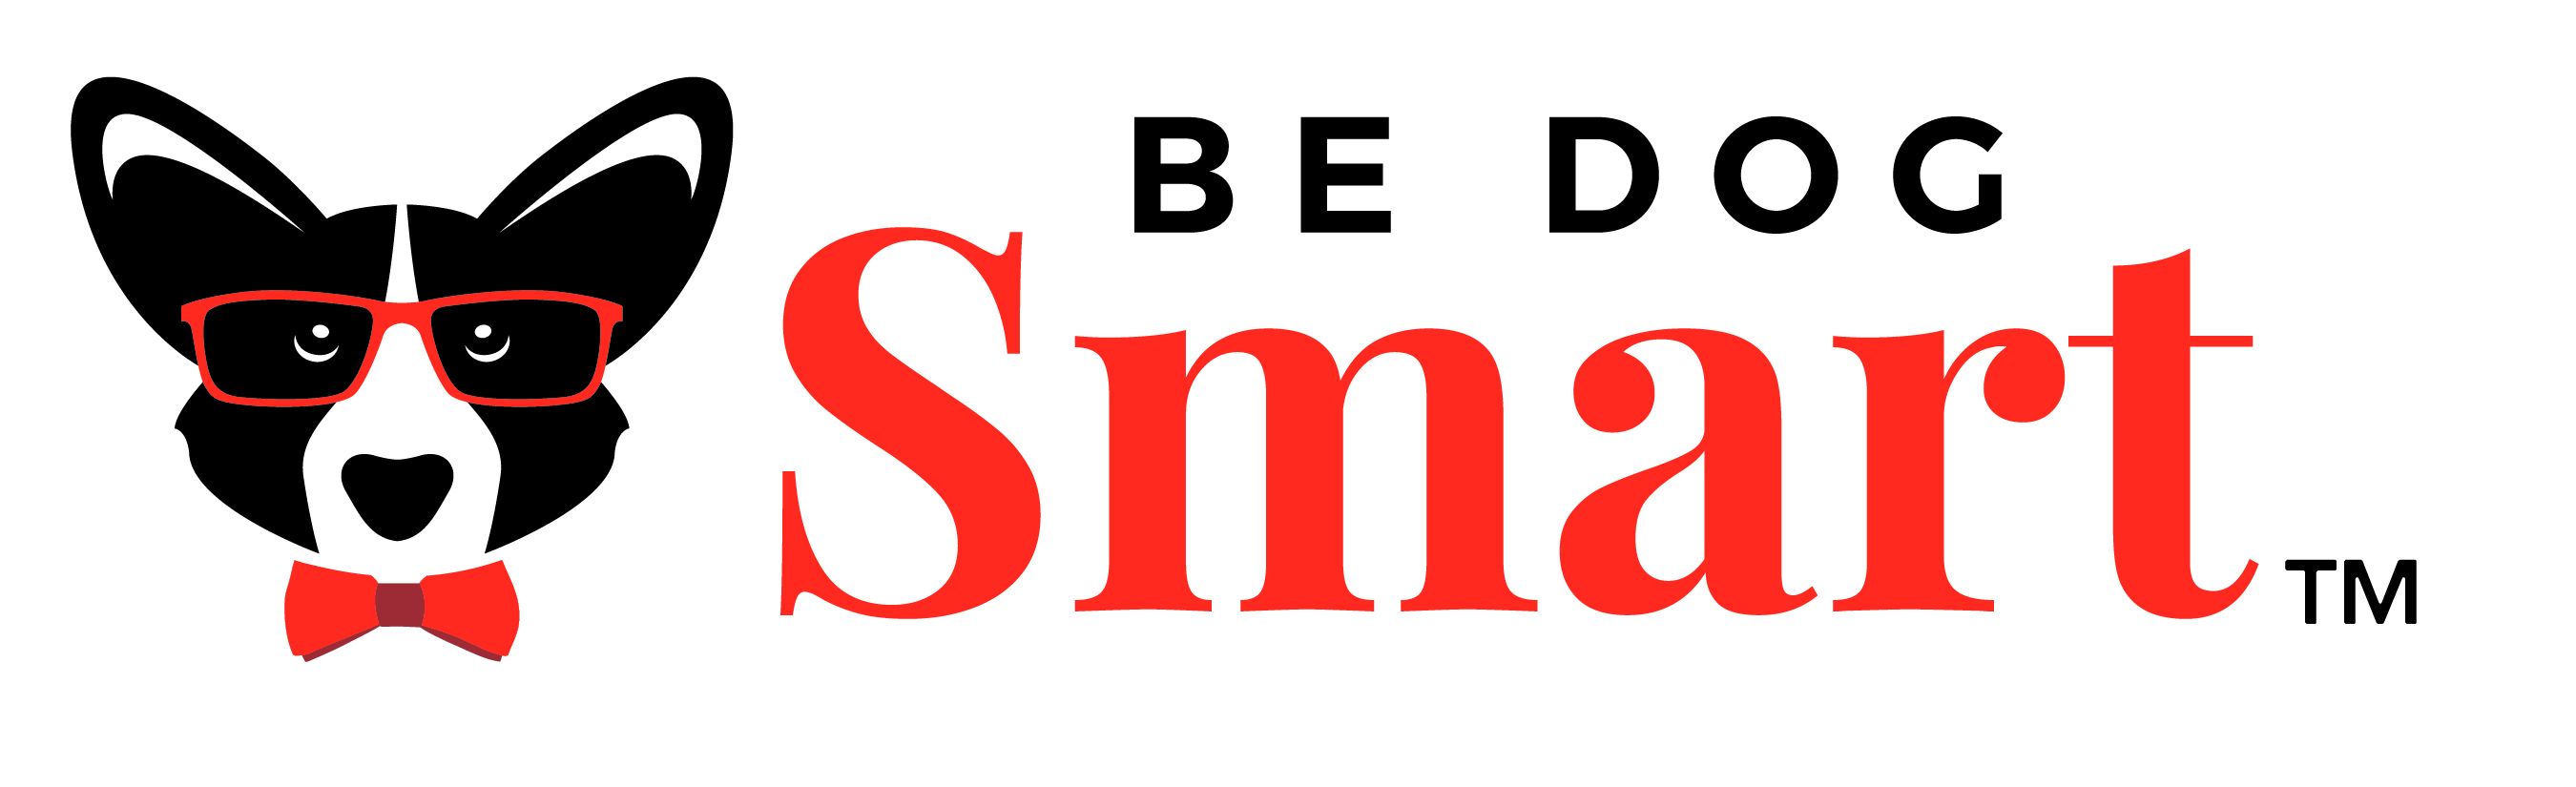 Be Dog Smarttm logo